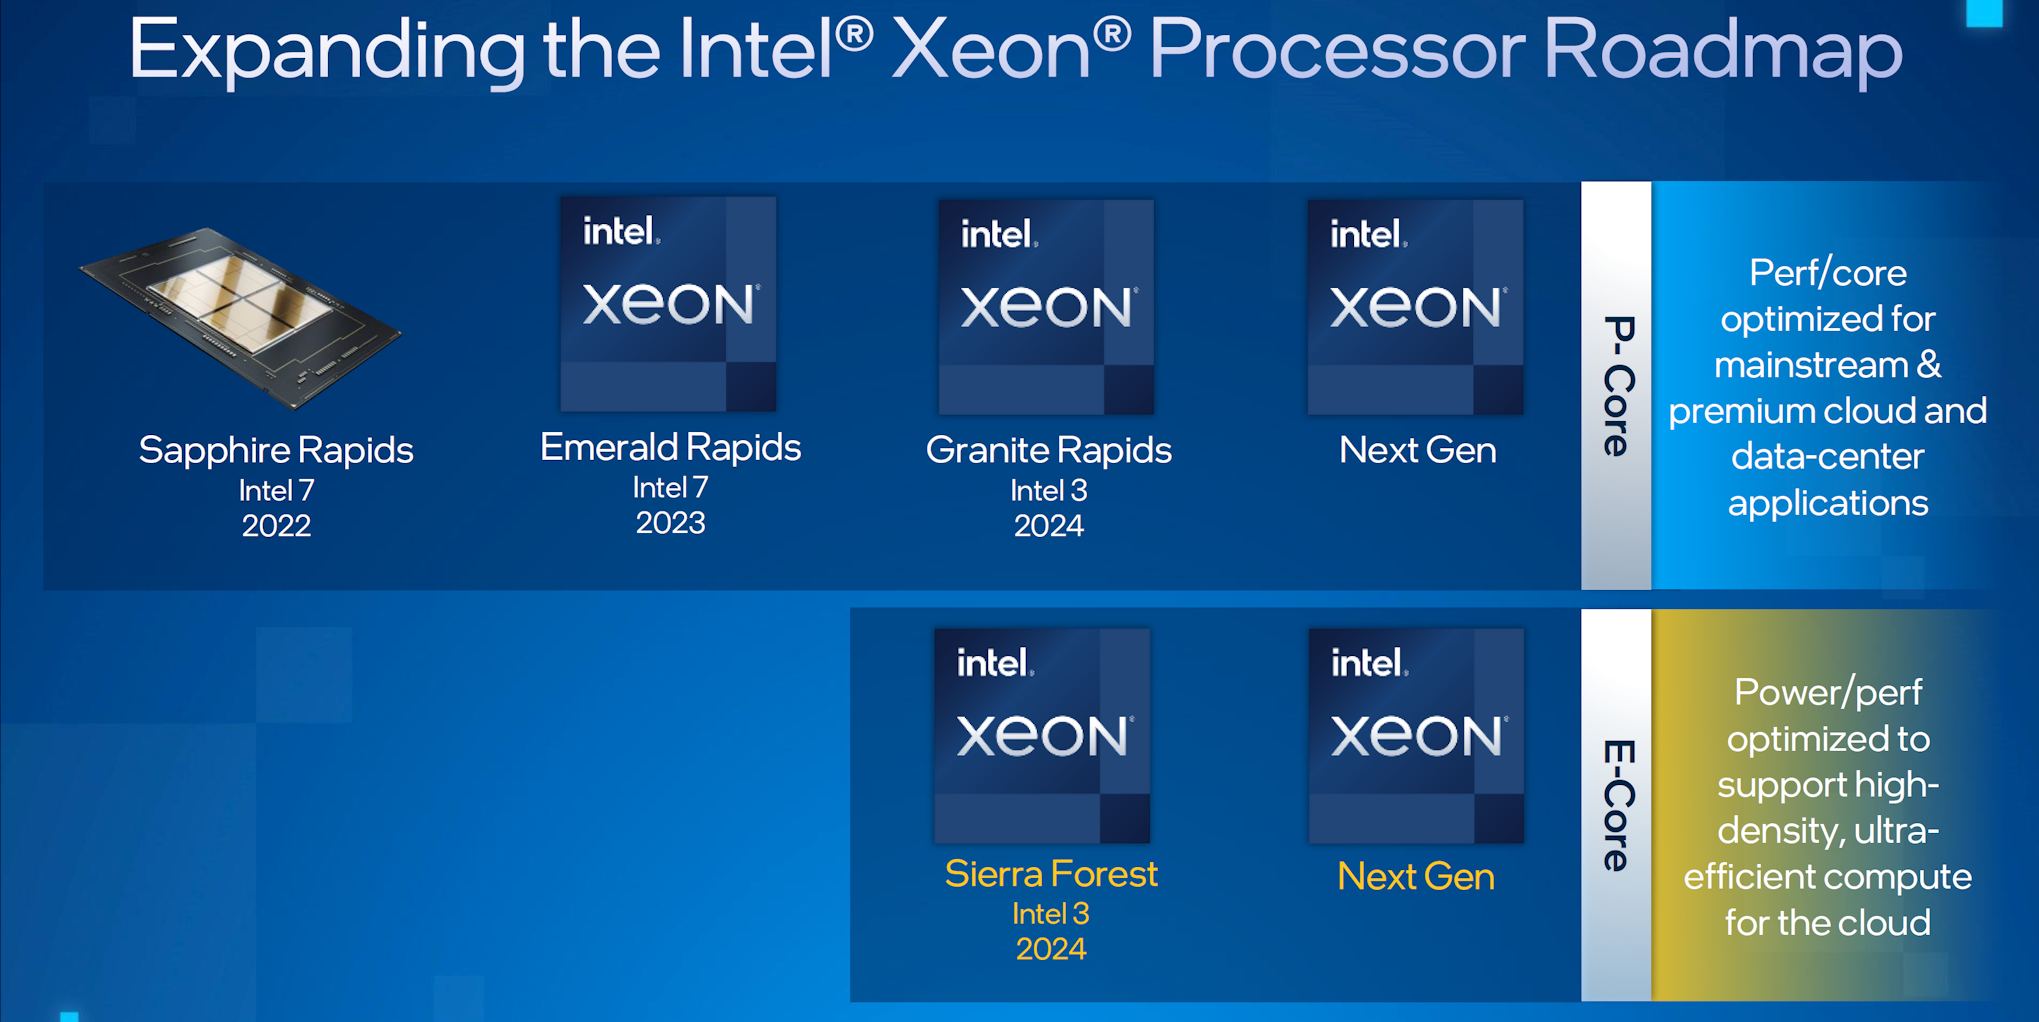 sierra forest xeon หลุดภาพซ็อกเก็ต LGA 7529 ขนาดใหญ่ใช้งานกับซีพียู Intel Xeon “Sierra Forest” รุ่นใหม่ในอนาคต